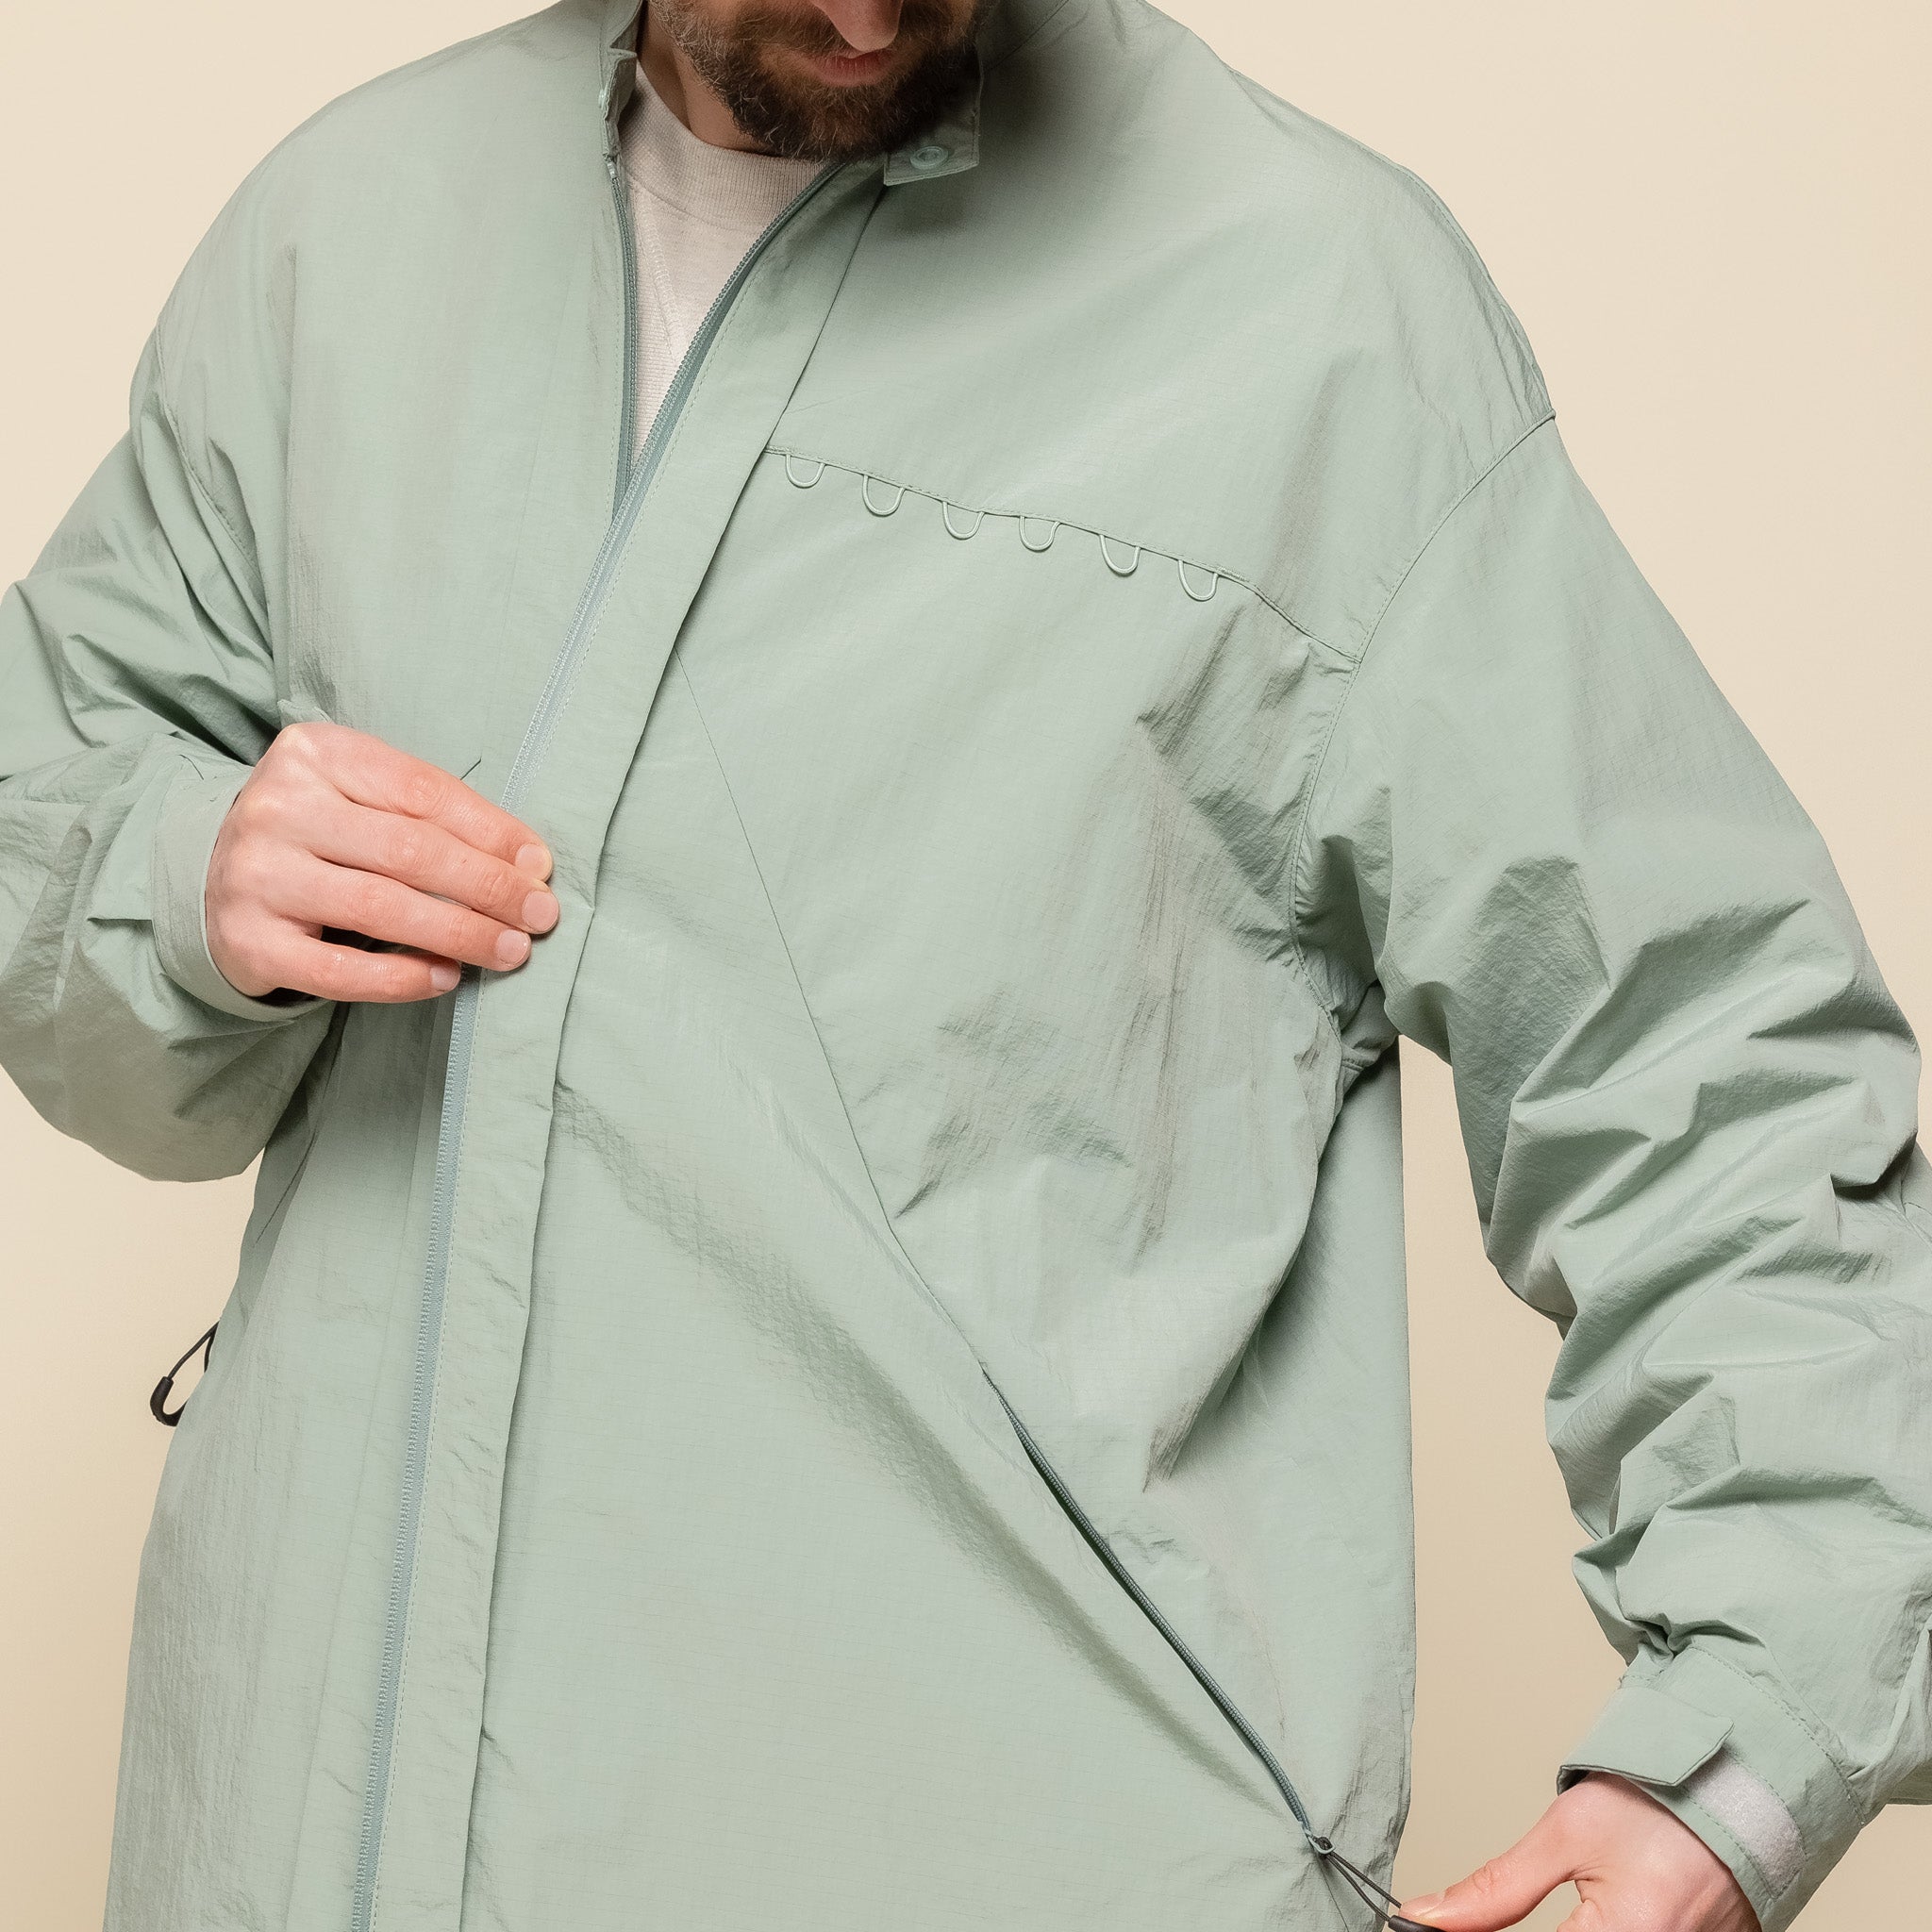 CMF Comfy Outdoor Garment - Untitled Coat - Light Khaki